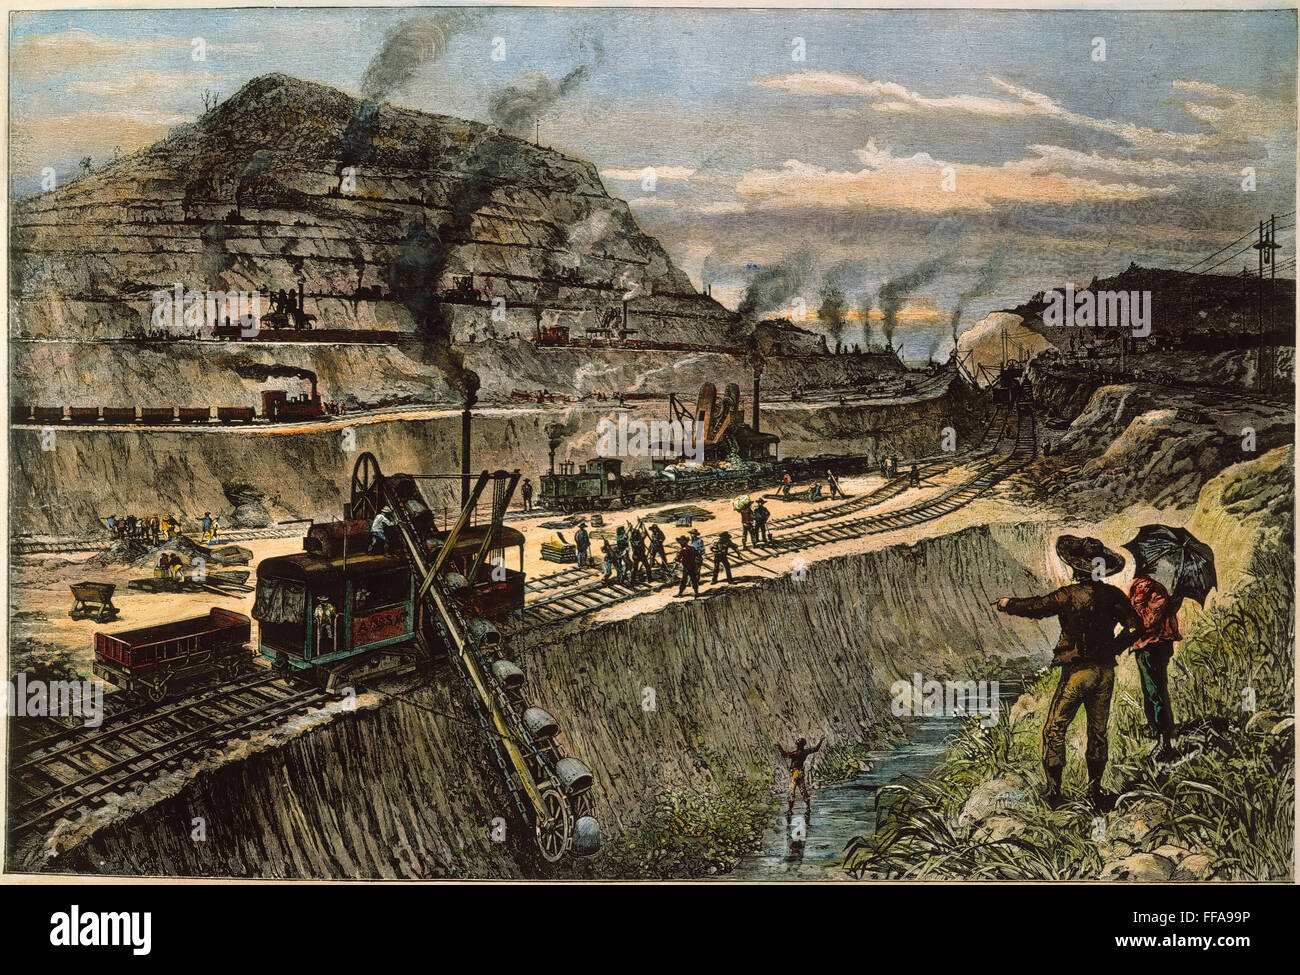 PANAMA: CULEBRA CUT, 1910. /nExcavating the Gaillard (Culebra) Cut for the Panama Canal, c1910: contemporary engraving. Stock Photo